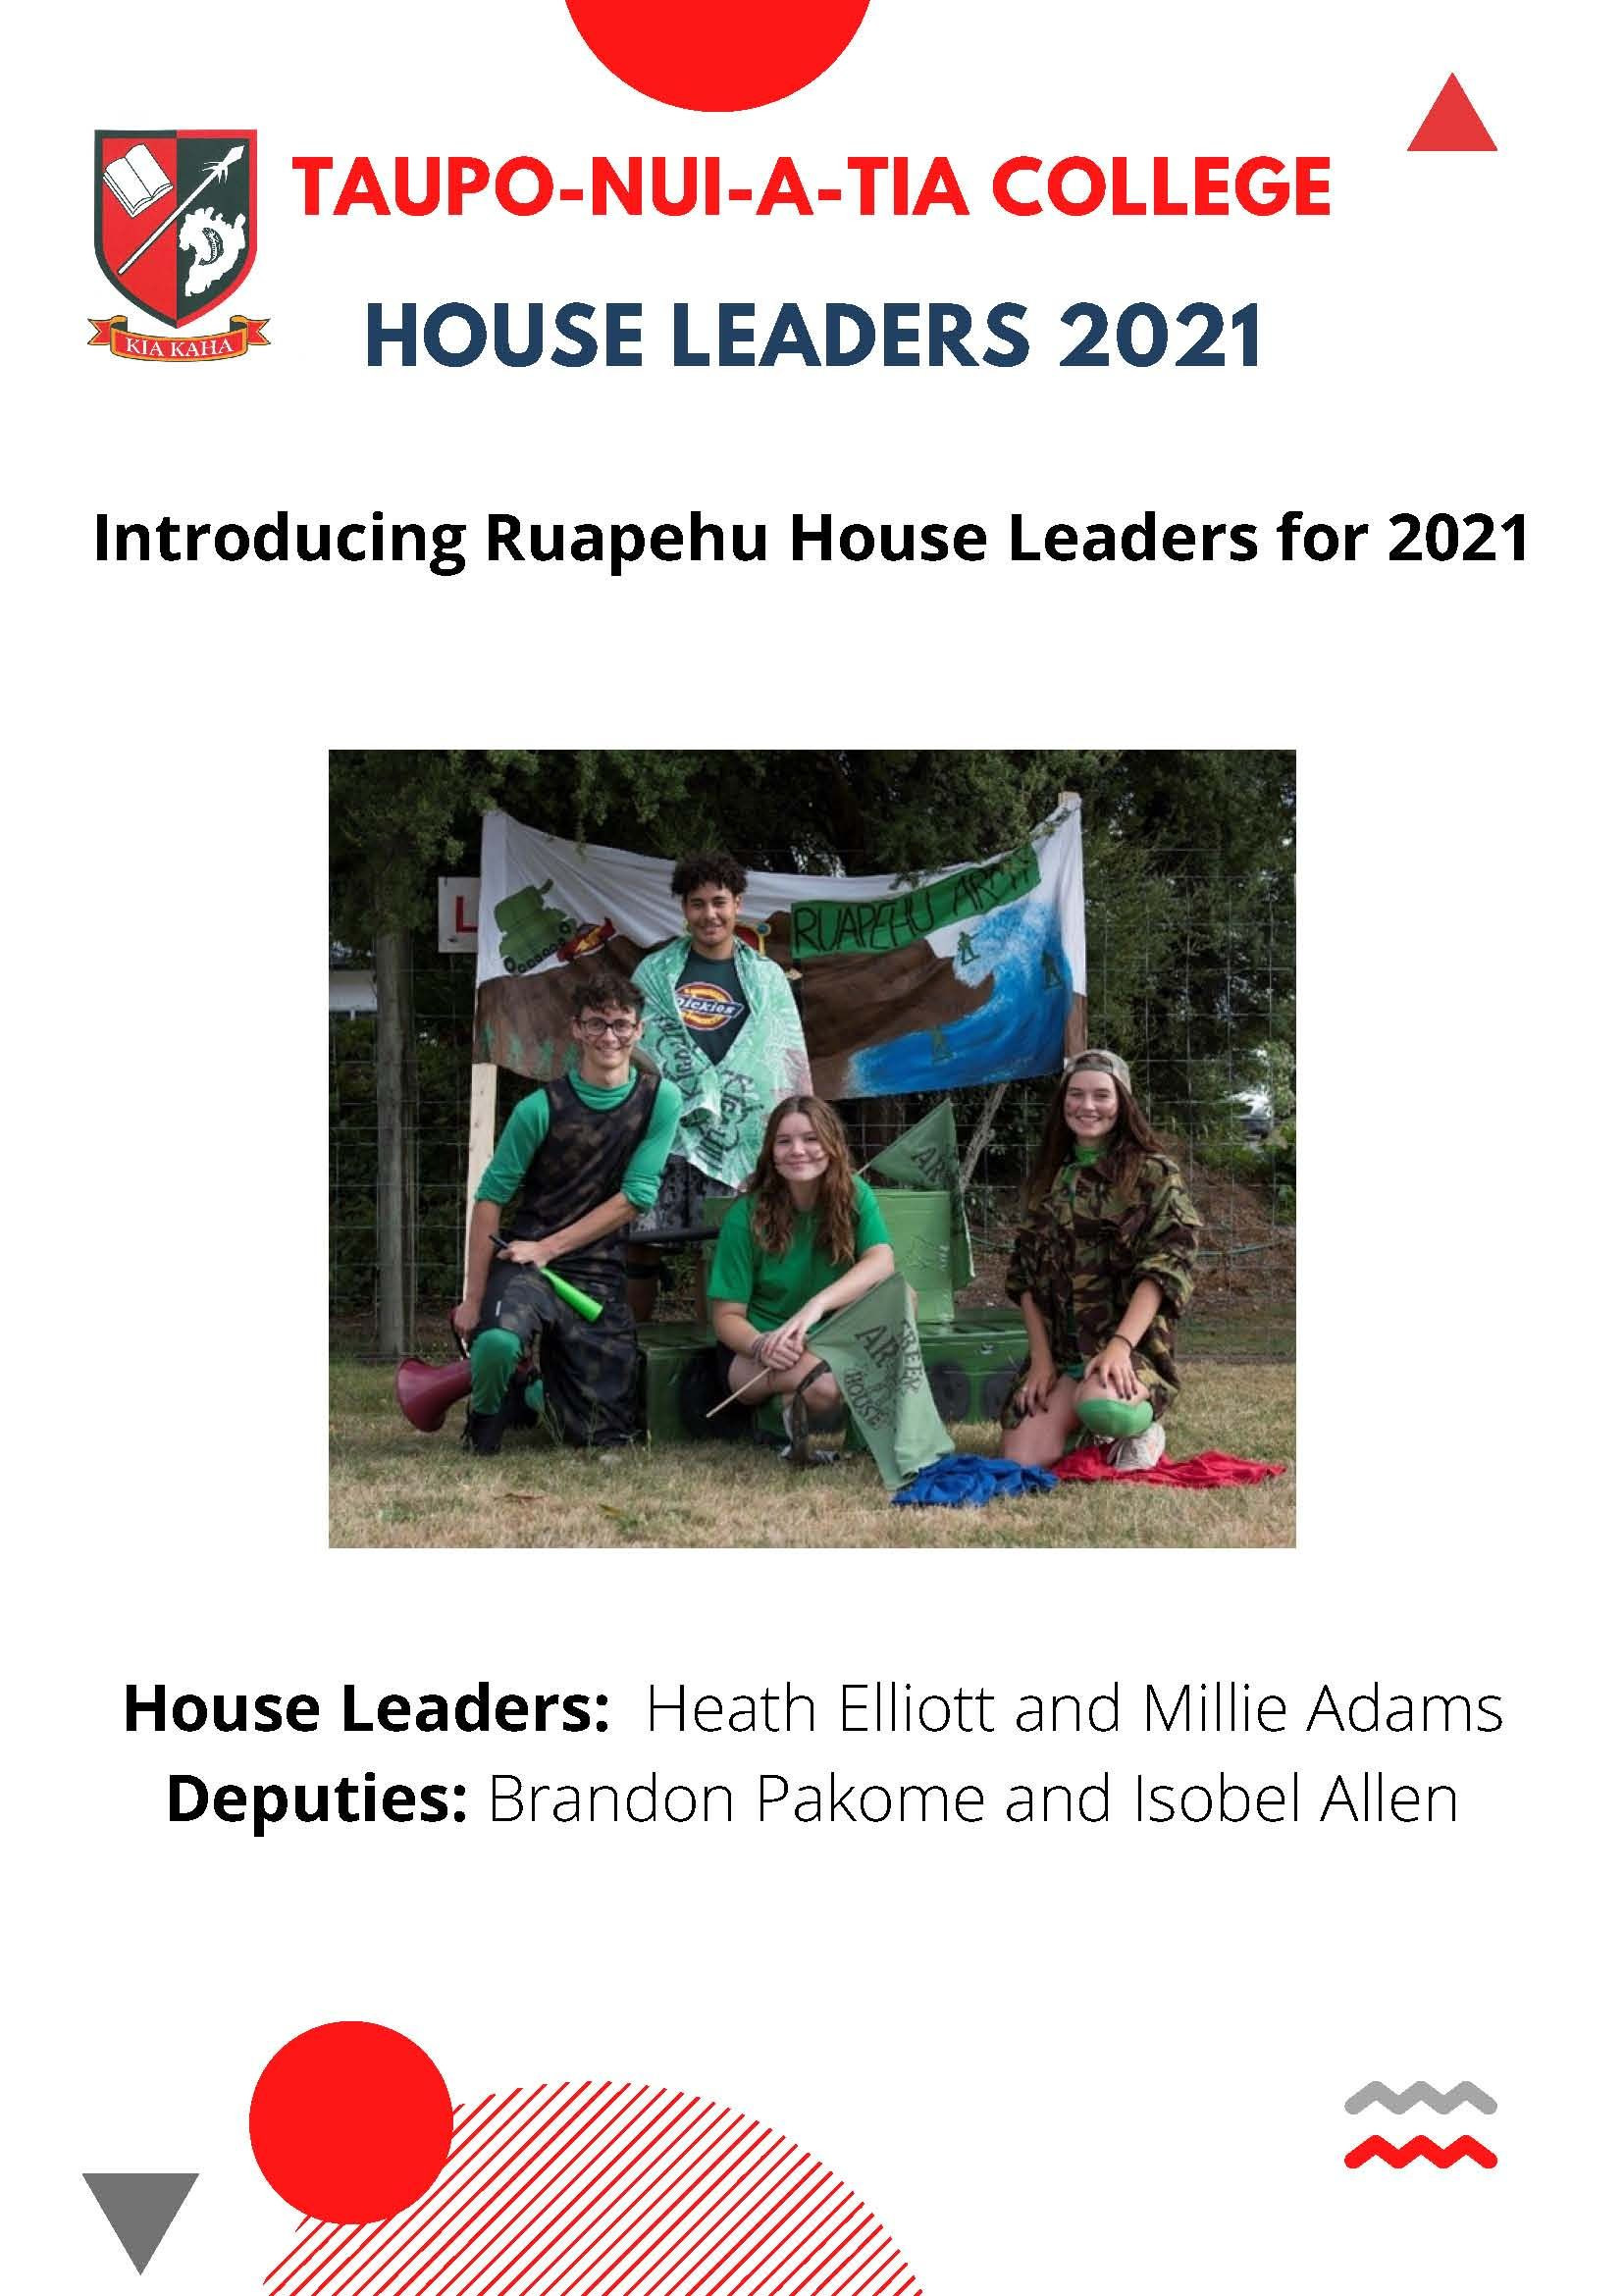 House Leaders Ruapehu 2021